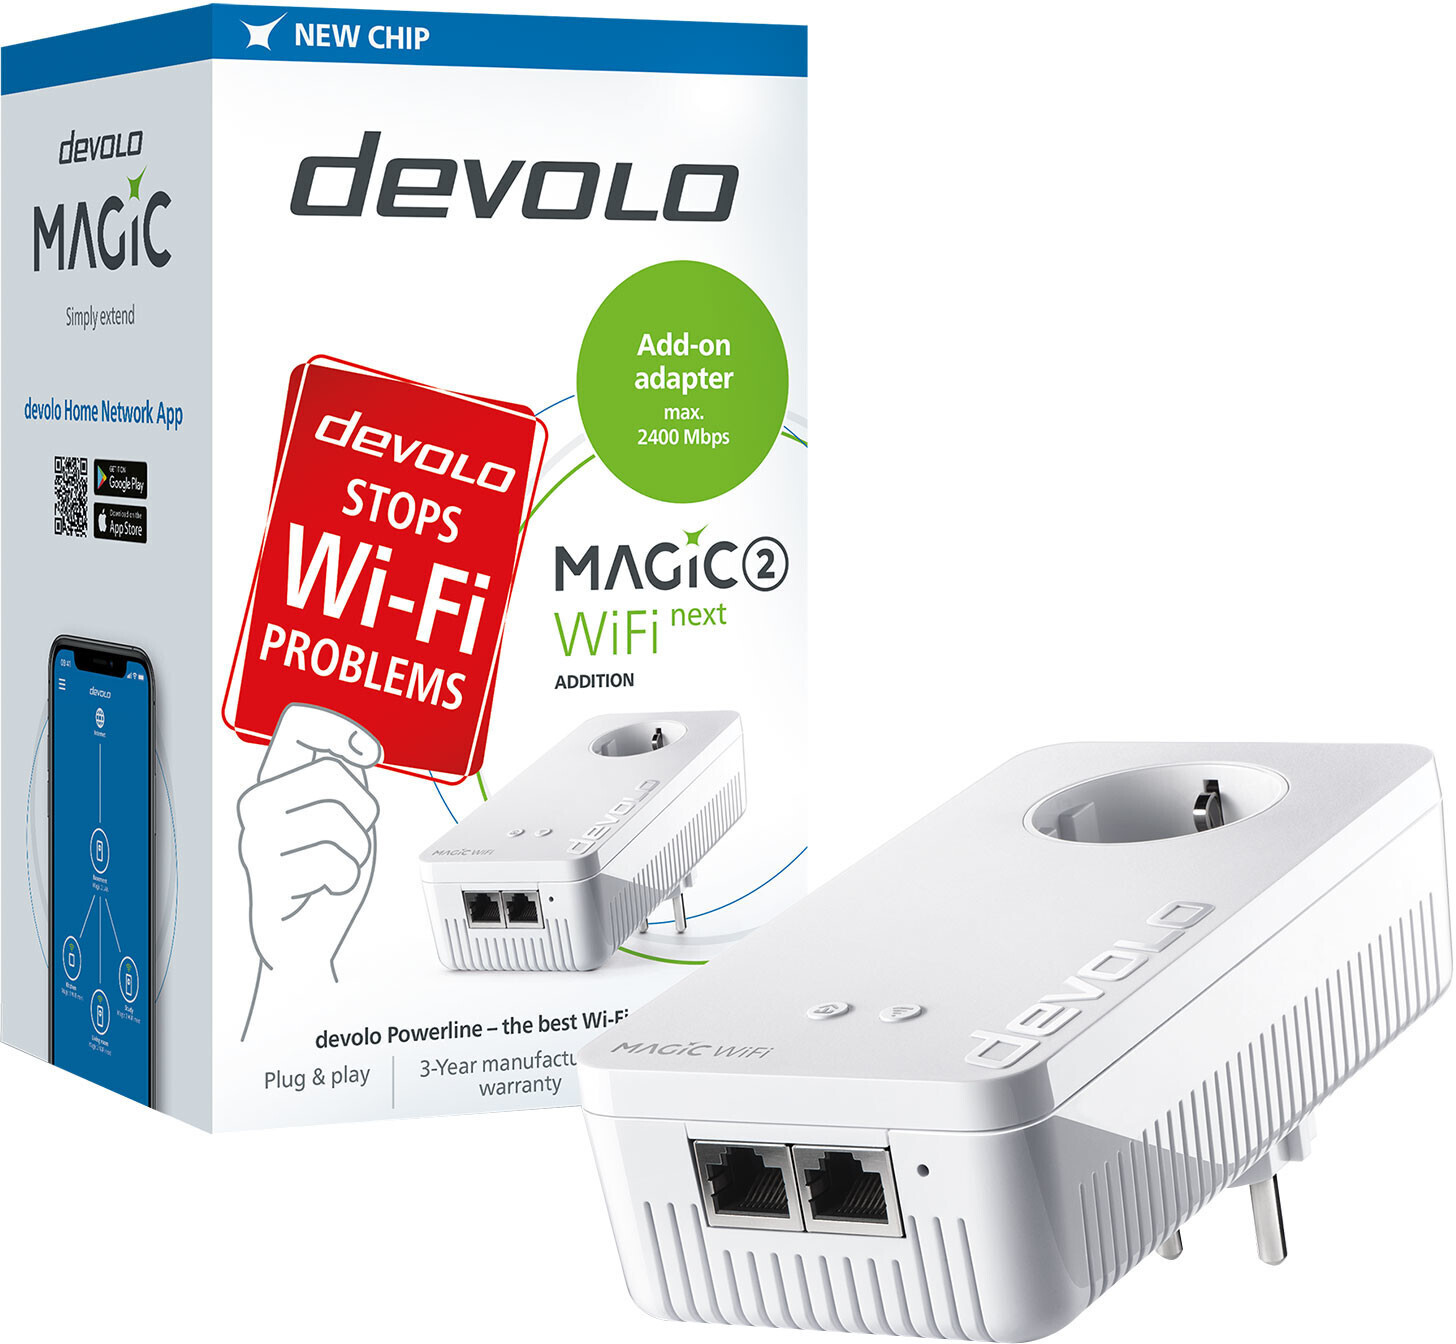  devolo Magic 2 LAN Powerline Starter Kit